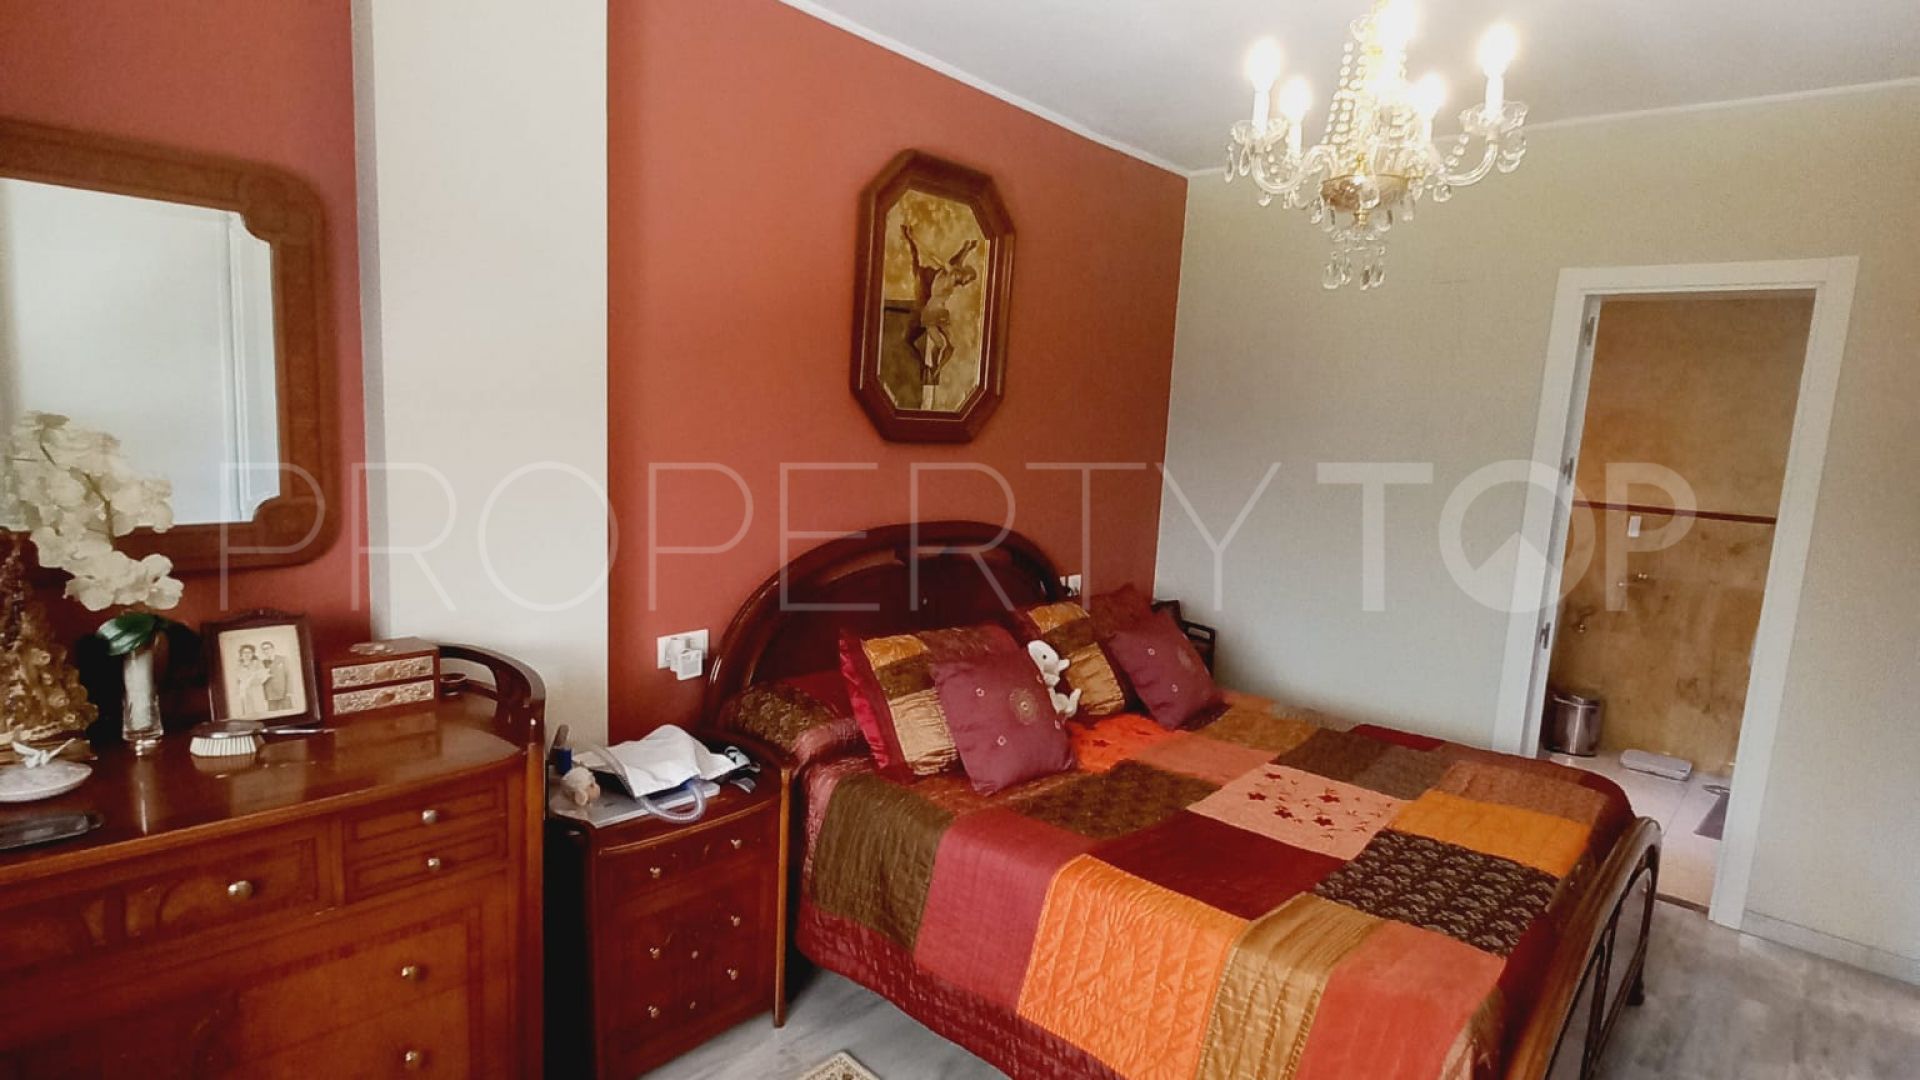 Ground floor apartment for sale in Terrazas del Rodeo with 2 bedrooms